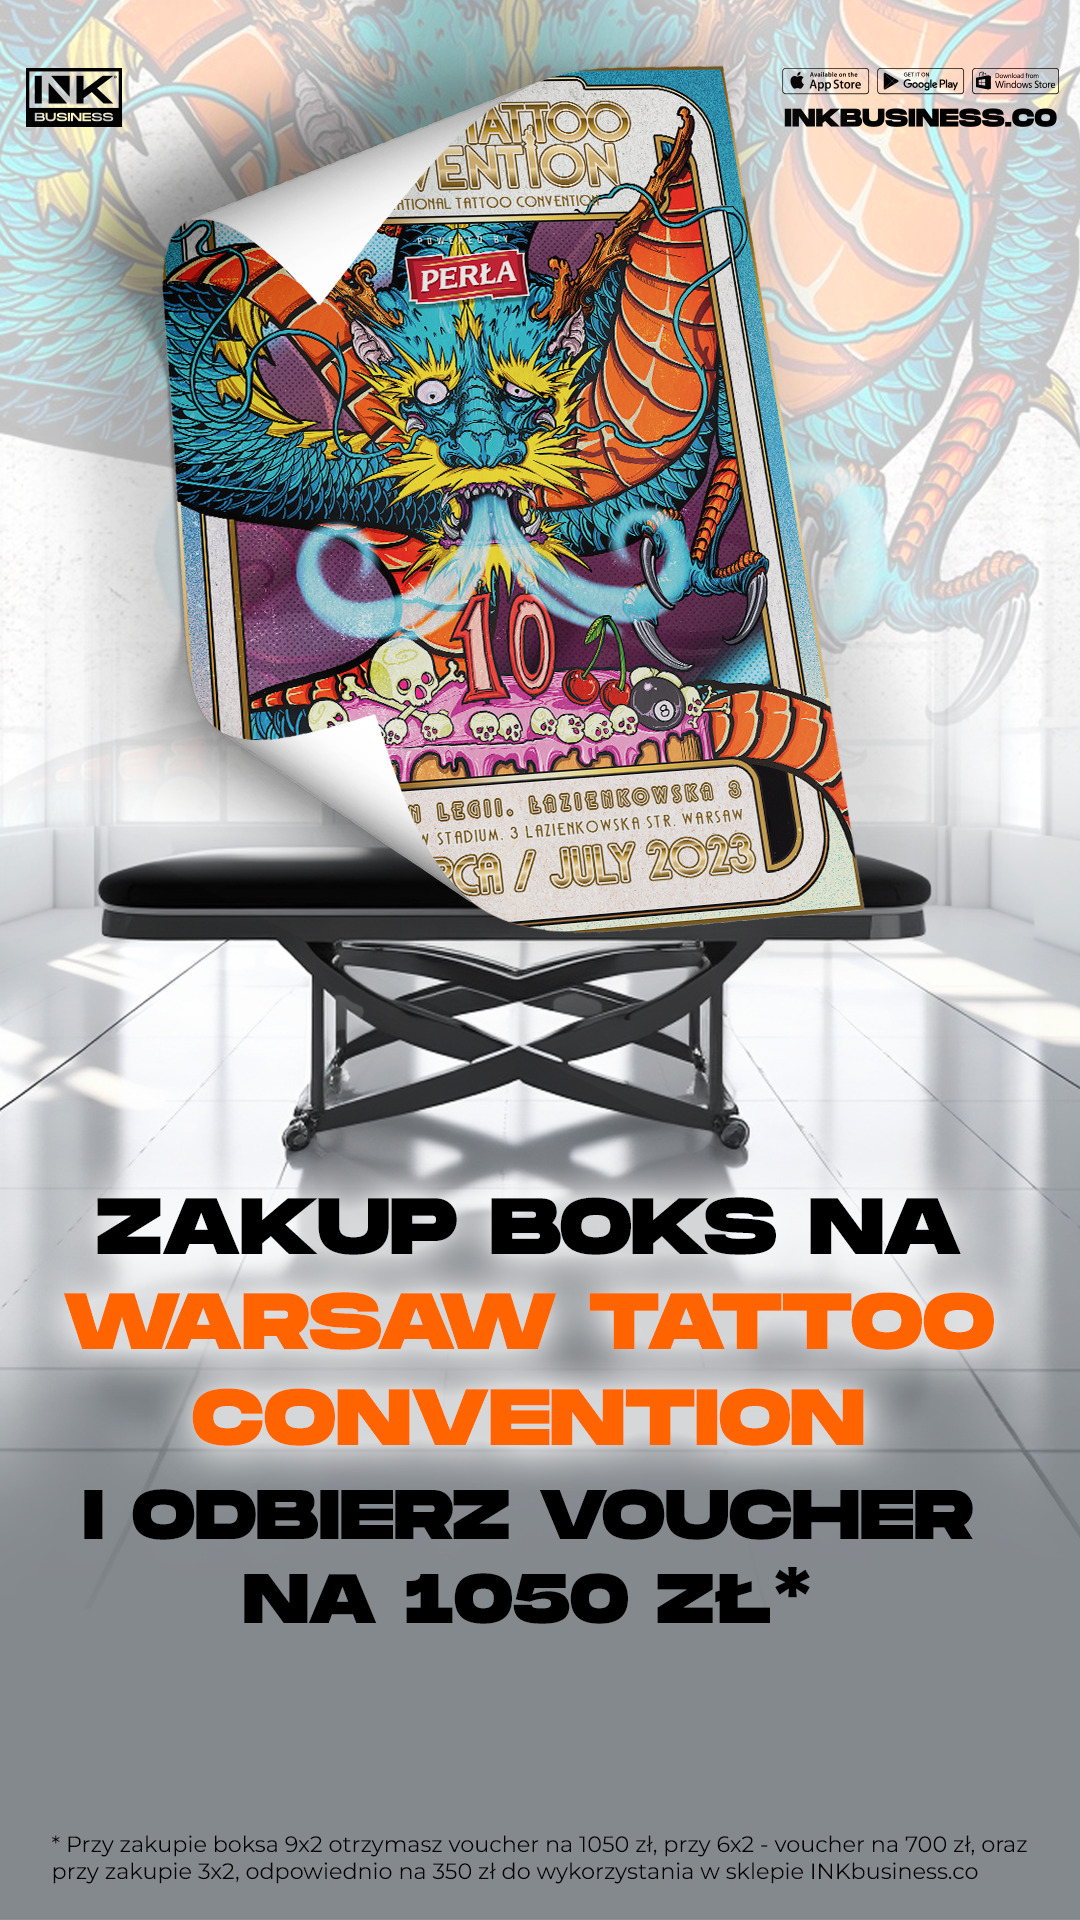 Kup boks Warsaw Tattoo Convention i odbierz voucher INKbusiness